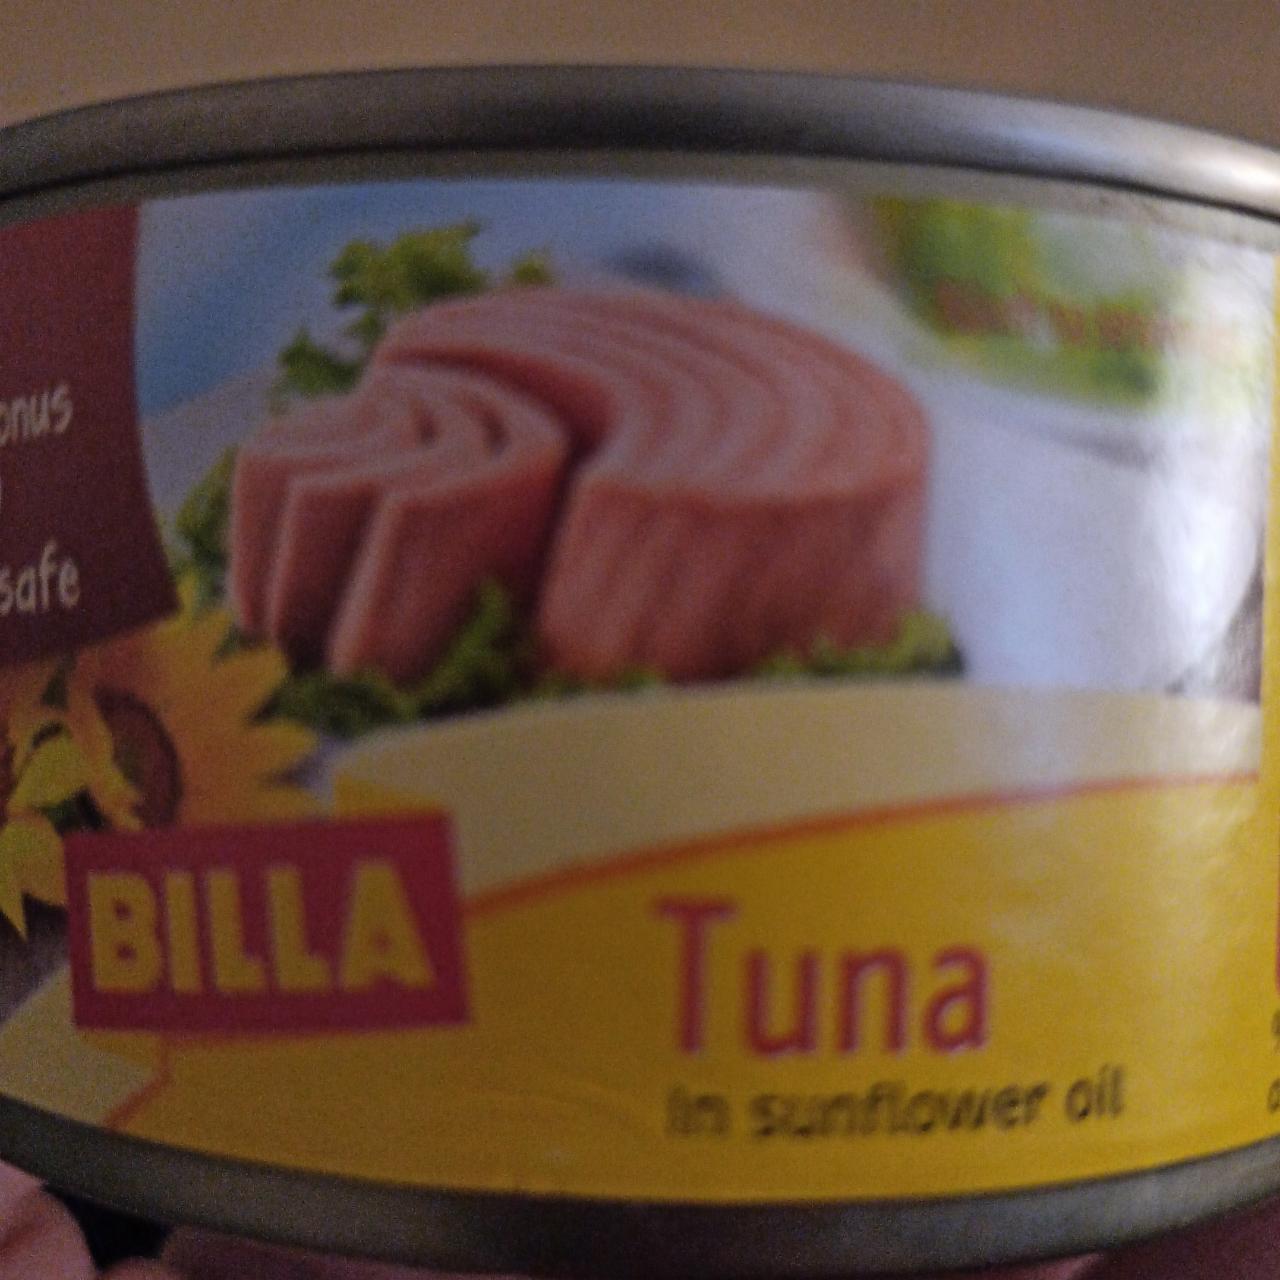 Fotografie - Tuna in sunflower oil Billa